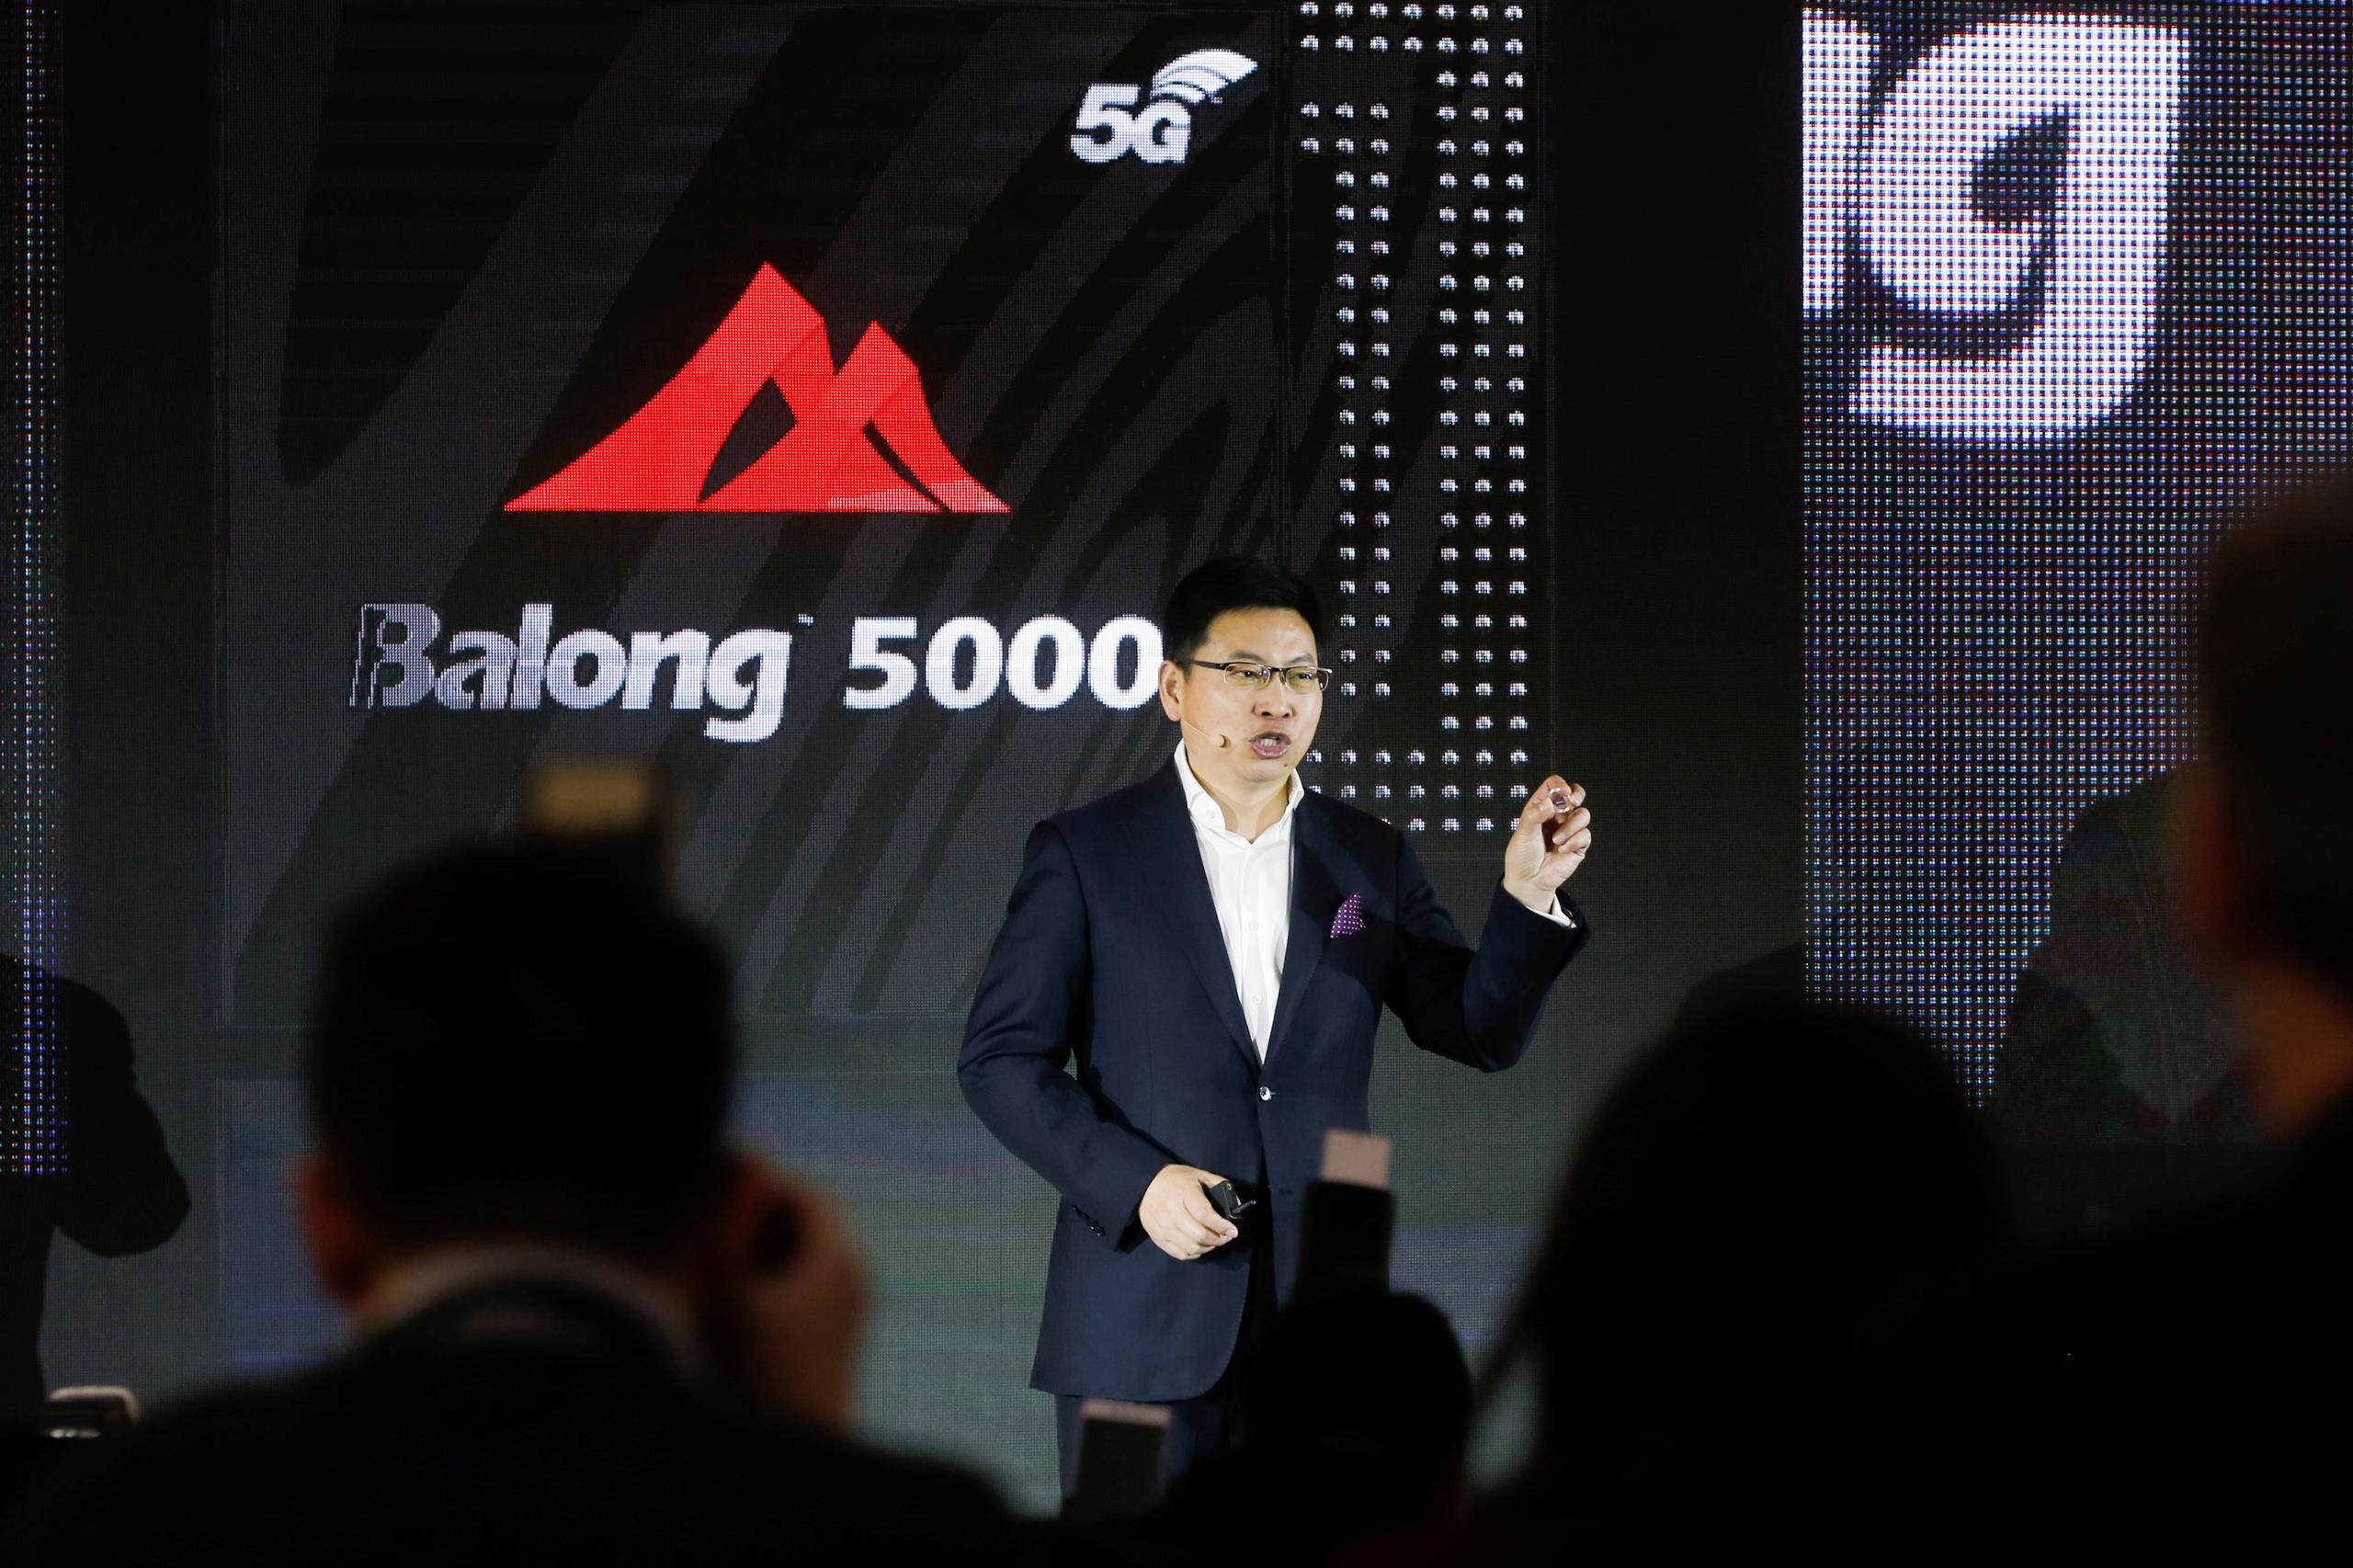 IHS: مودم Huawei Balong 5000 5G "بعيد عن المثالية" مقارنةً بالمنافسين